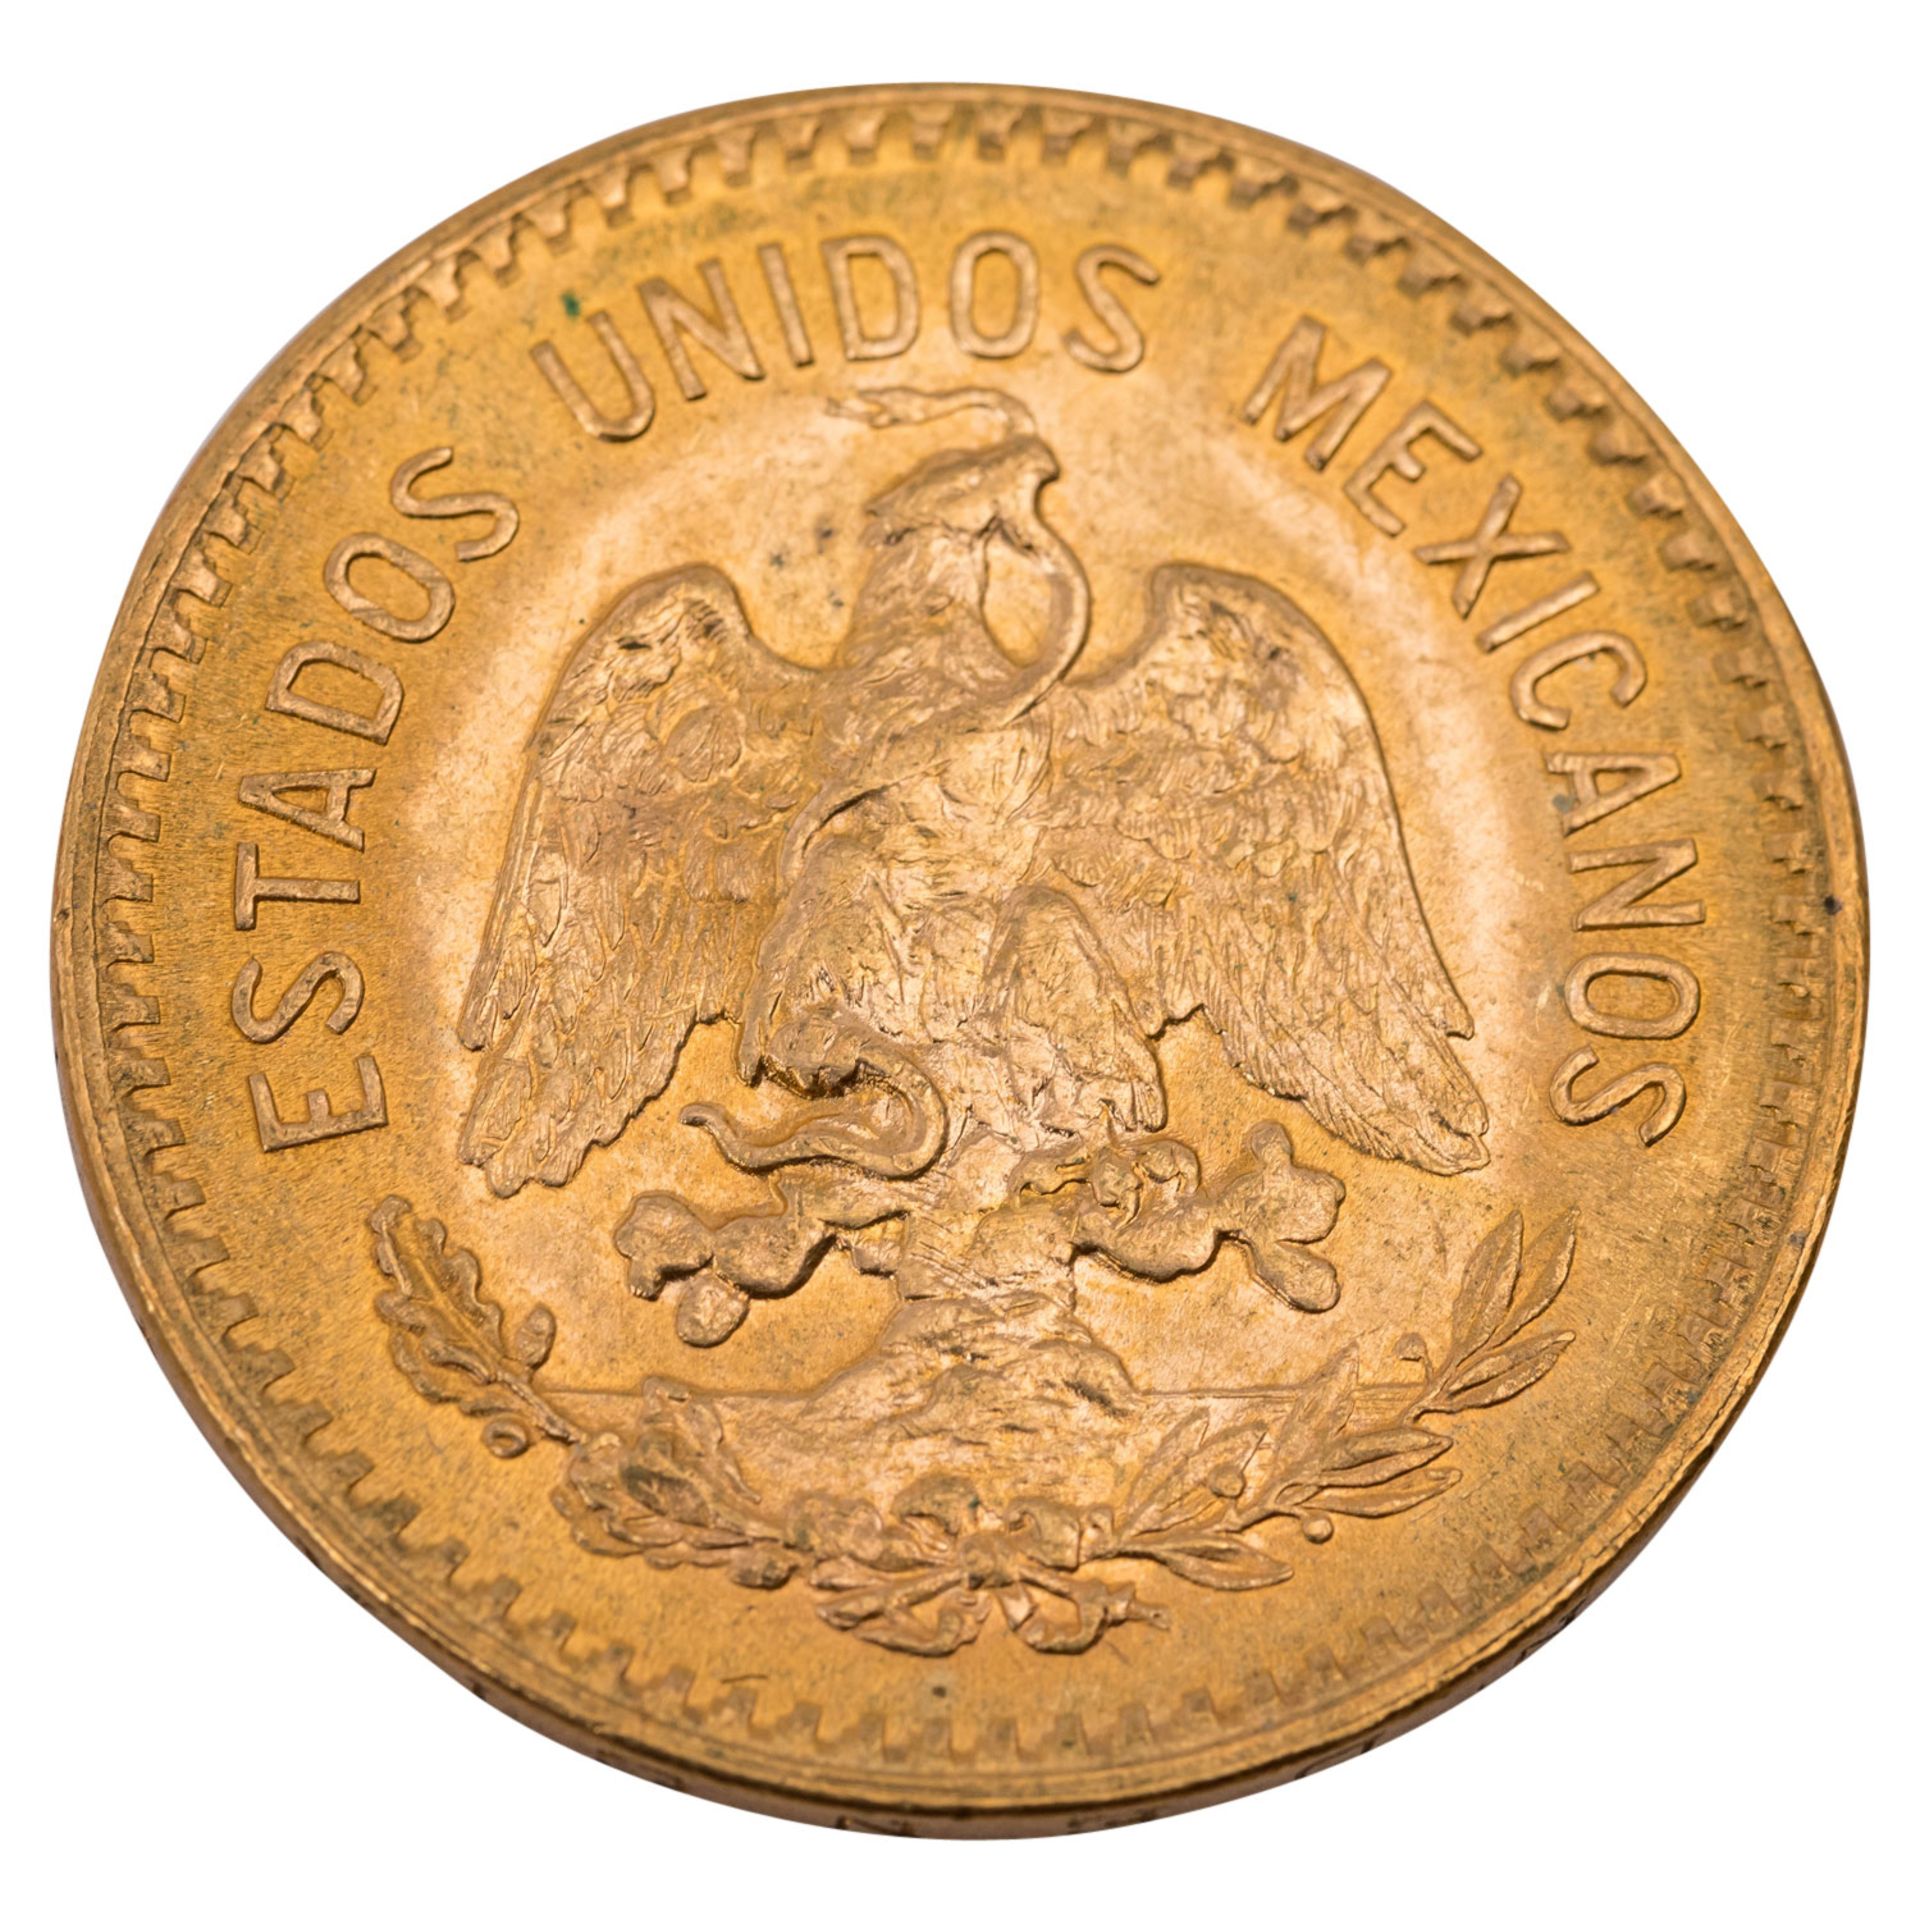 Mexiko/GOLD - 10 Pesos 1959, - Image 2 of 2